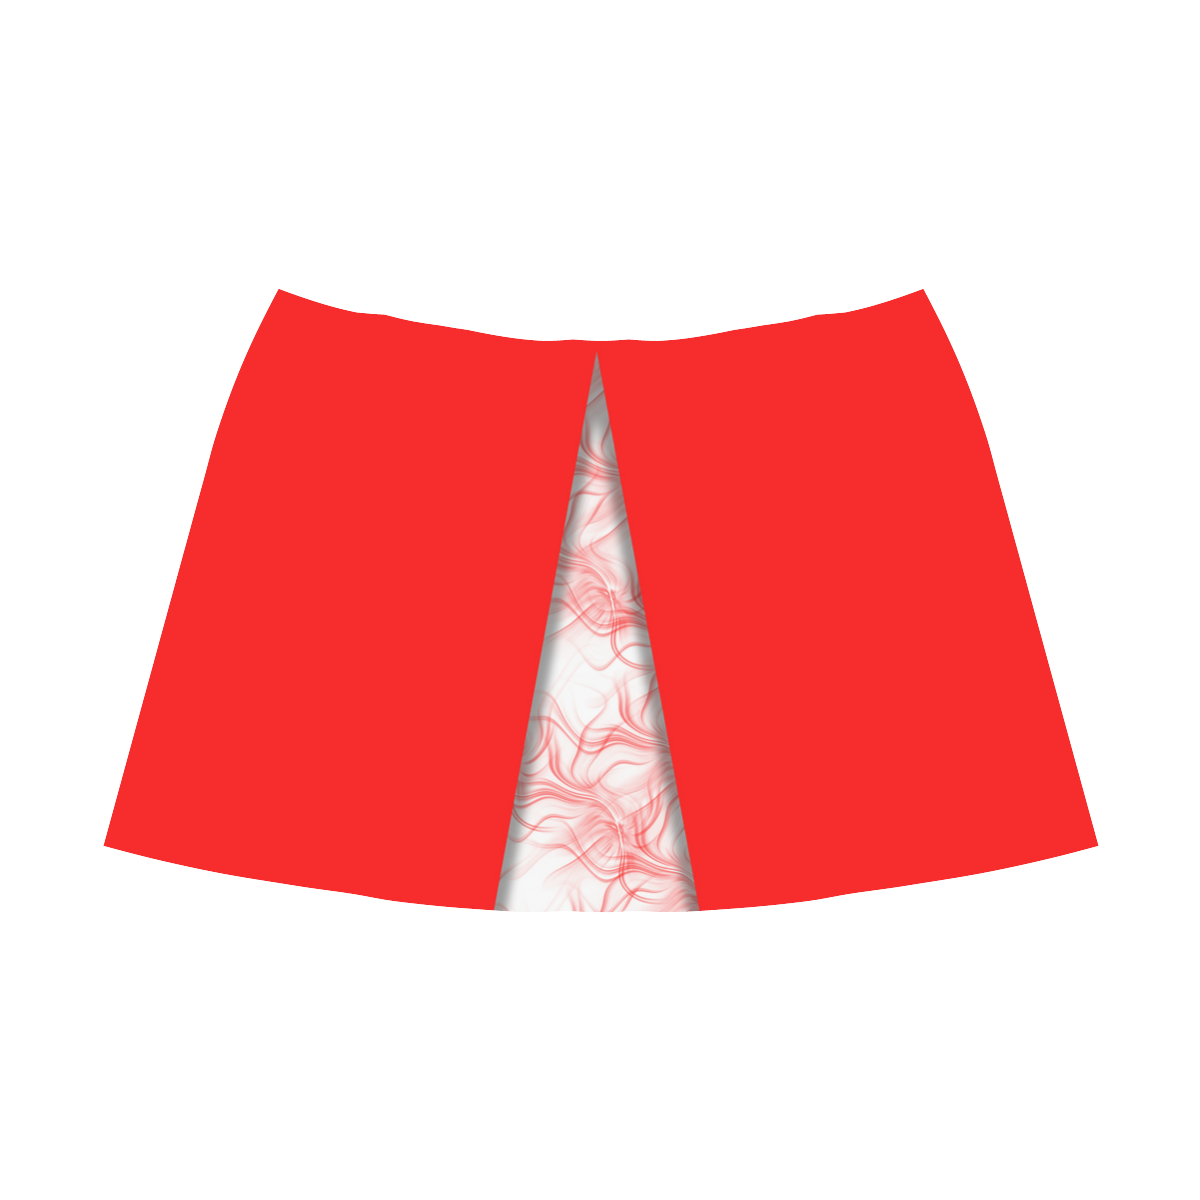 Smoke Red Flames Mnemosyne Women's Crepe Skirt (Model D16)